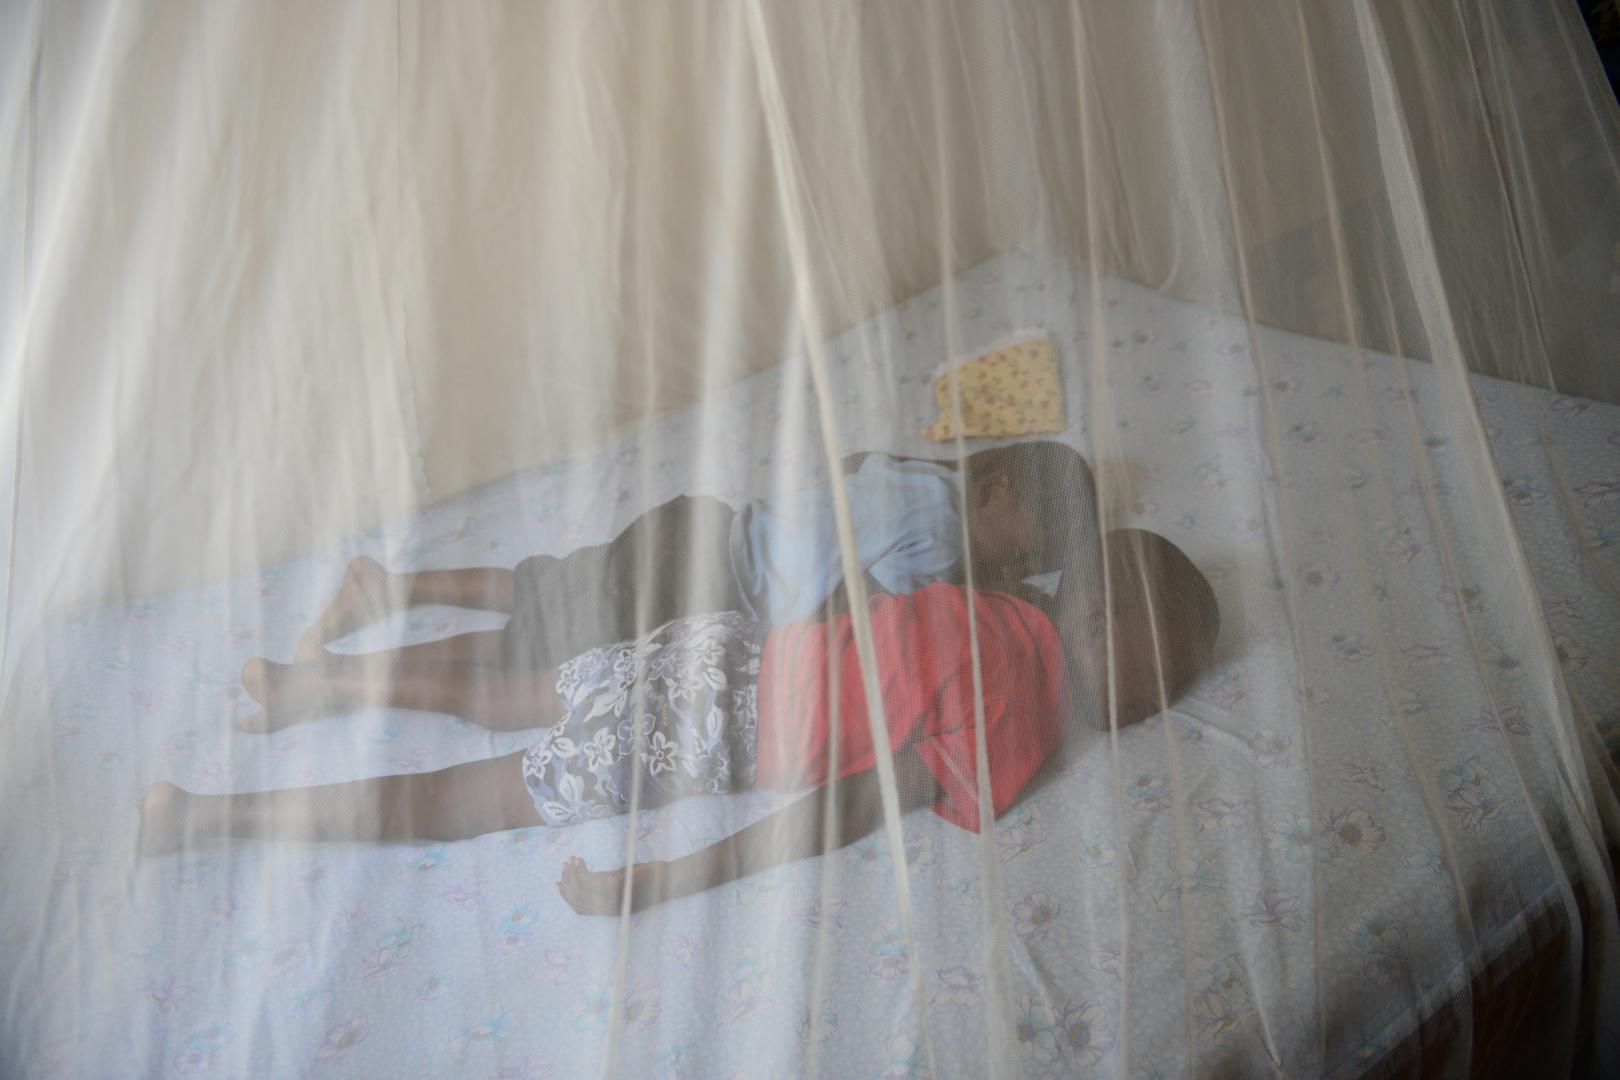 Bridging the funding gap to defeat malaria in Africa